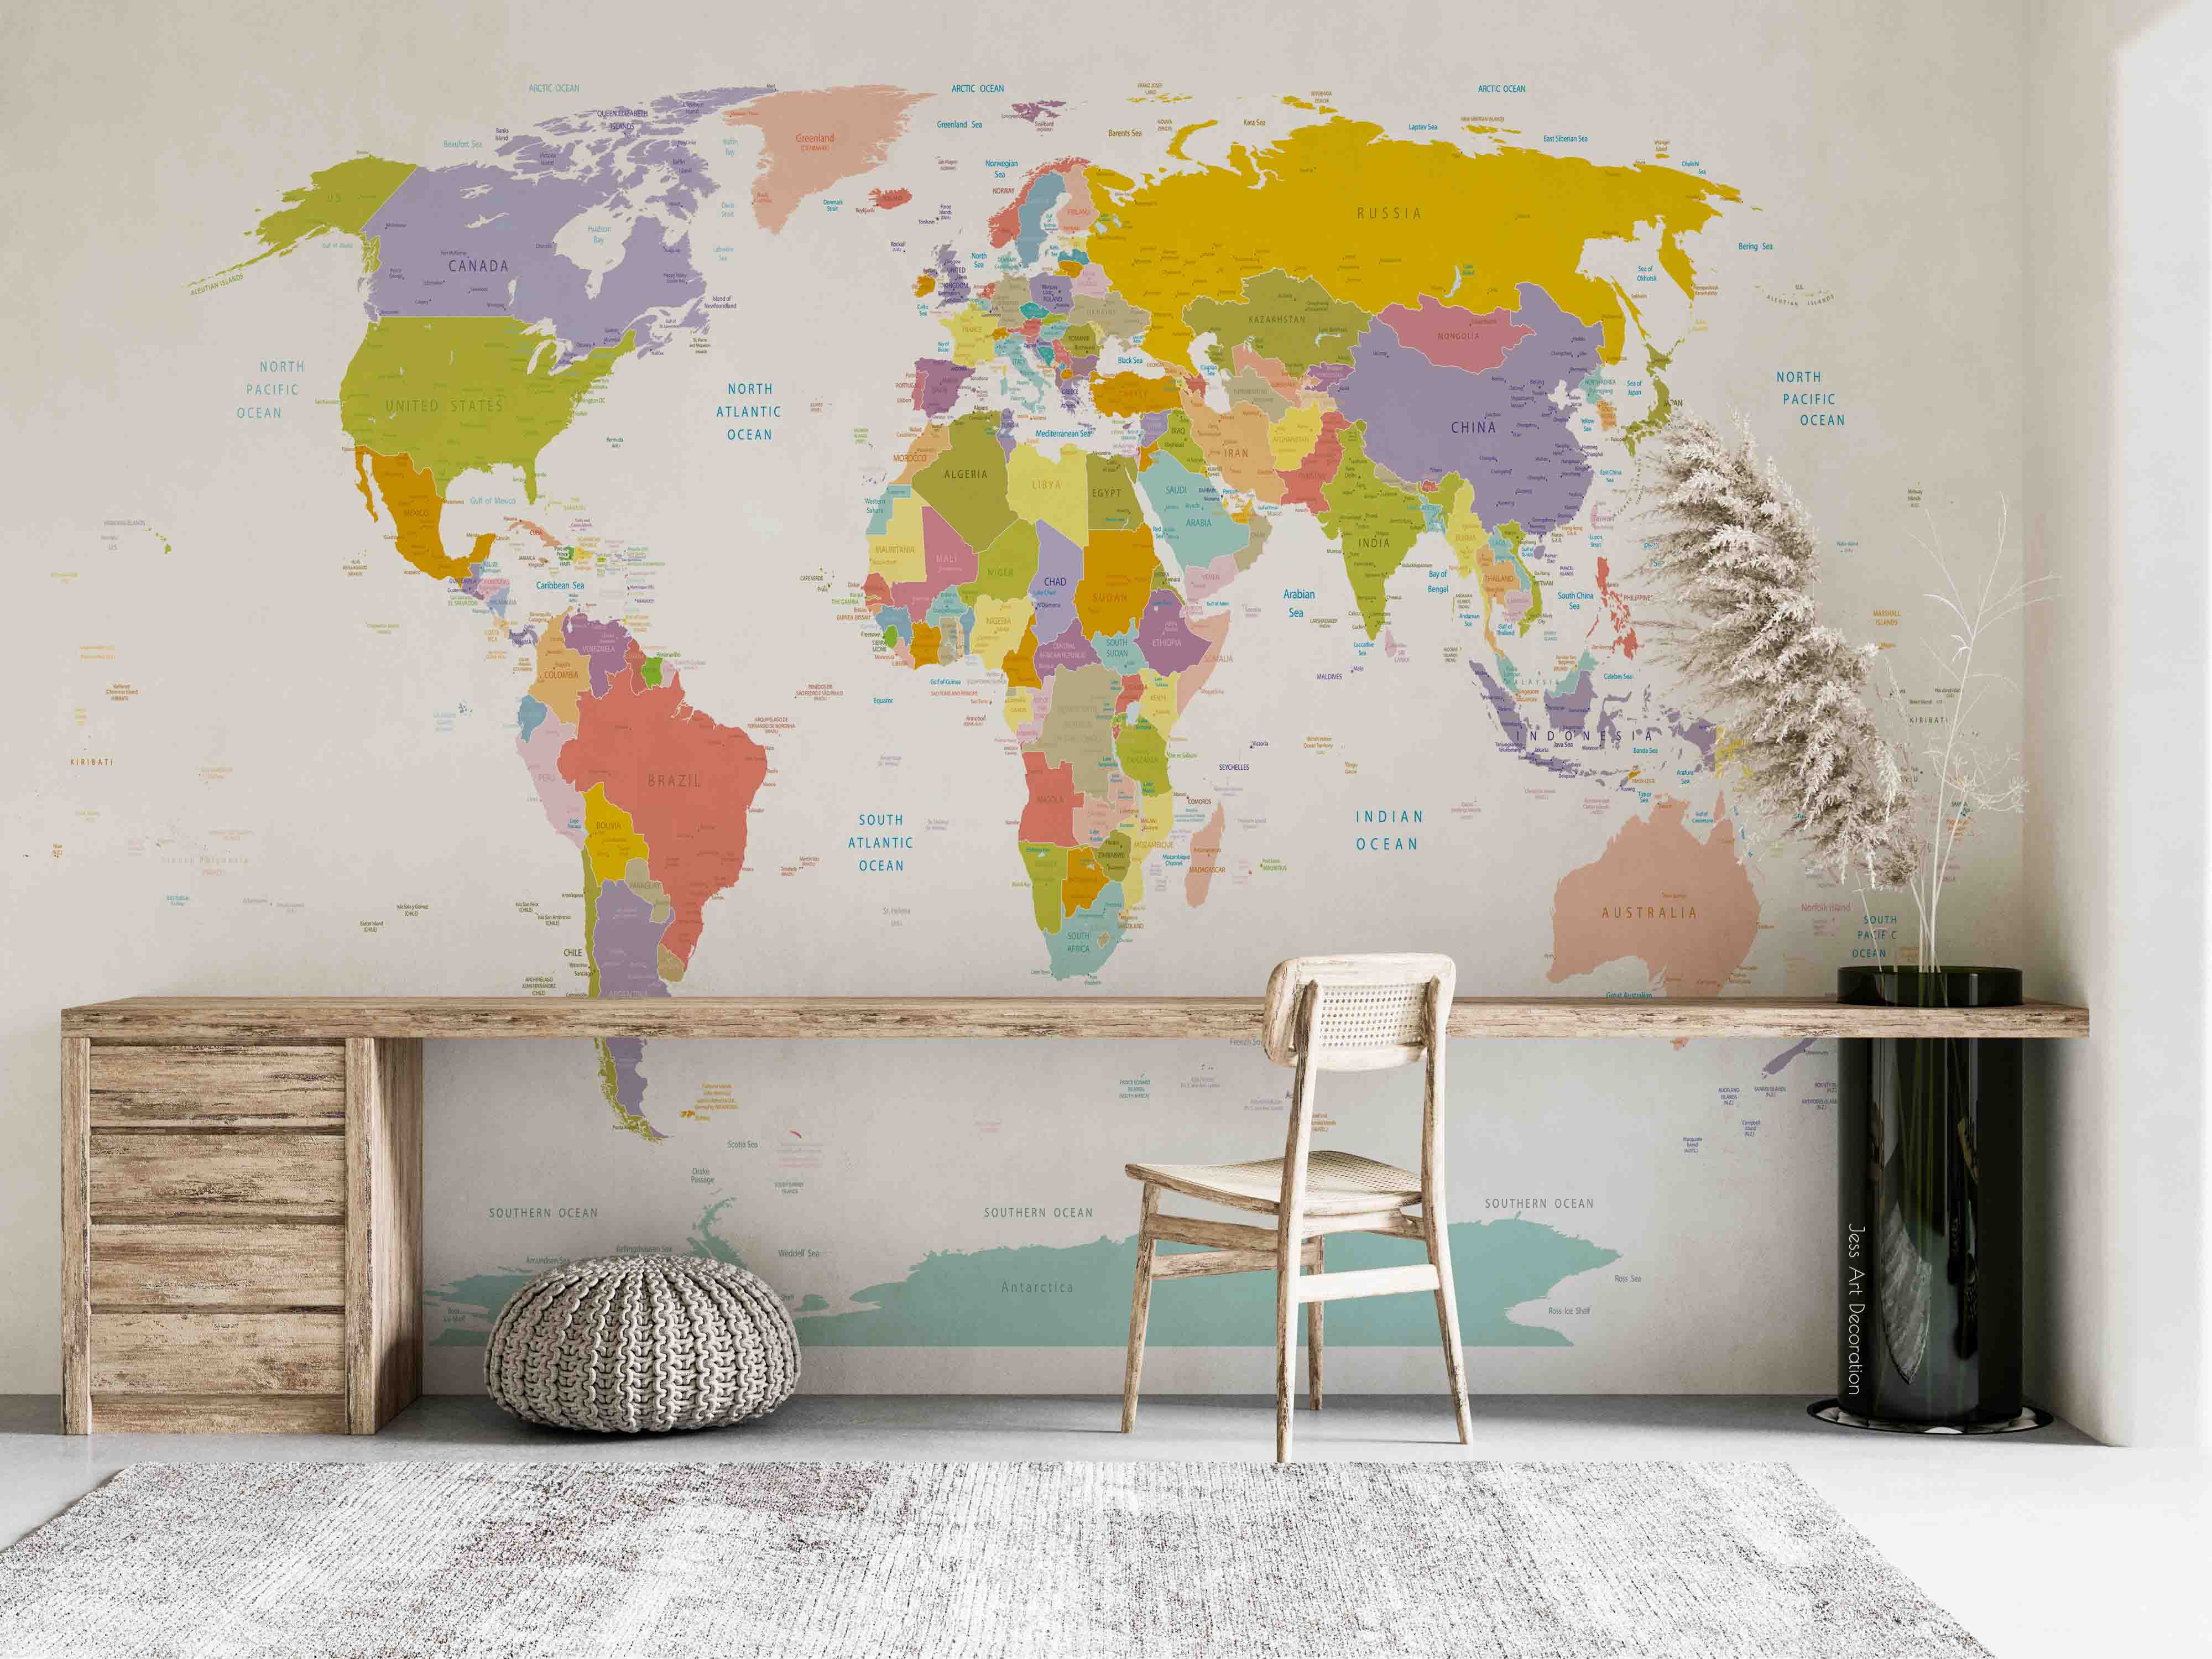 3D Colorful World Map Wall Mural Wallpaper GD 3699- Jess Art Decoration